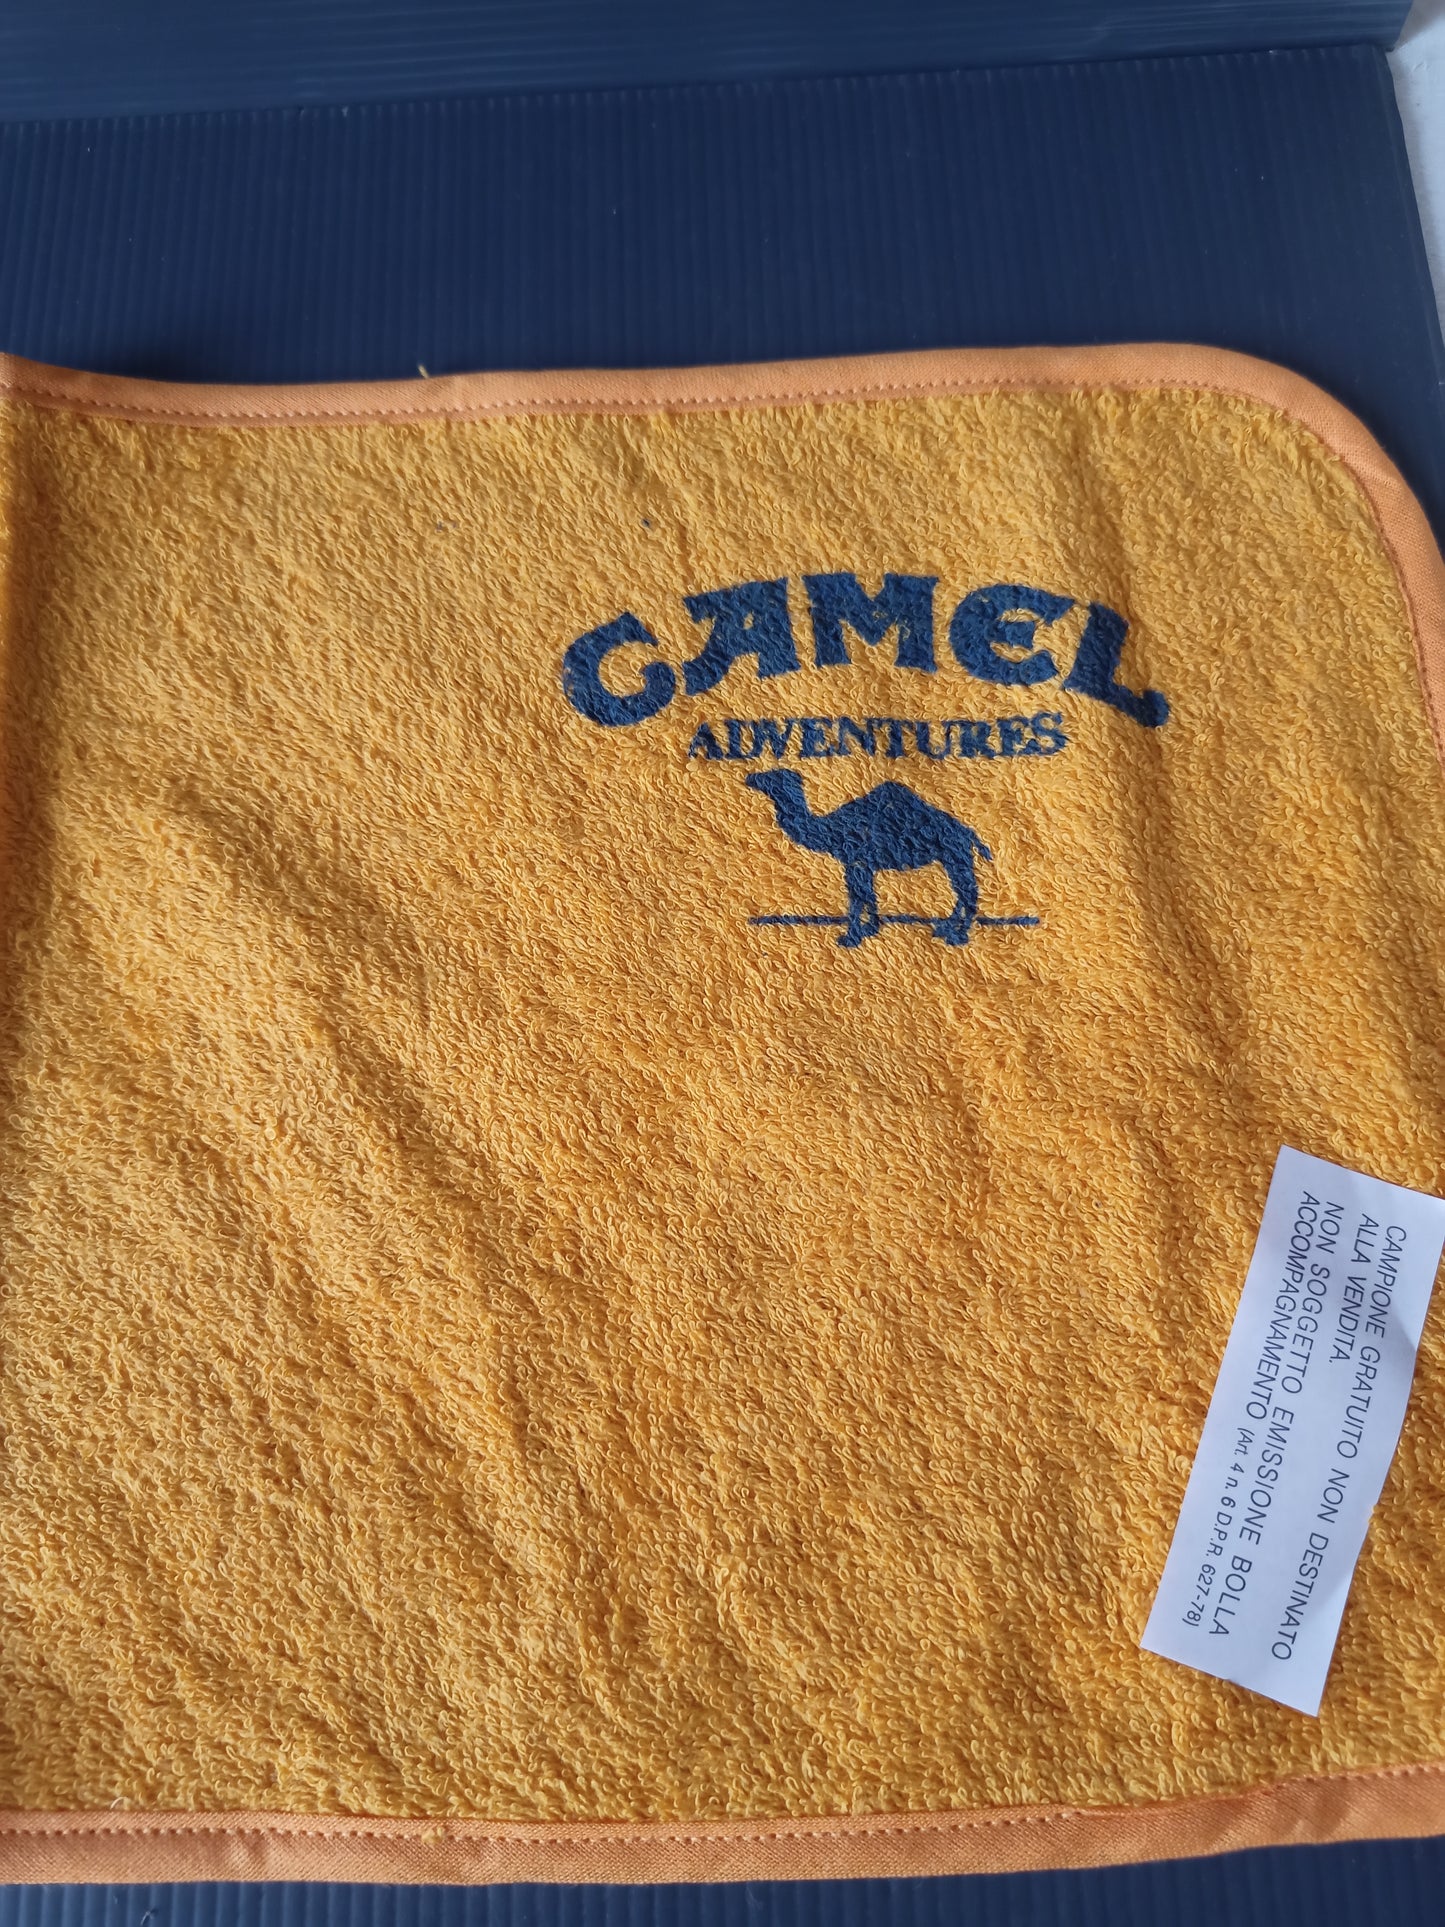 Tovaglietta Gadget Camel, originale anni 80